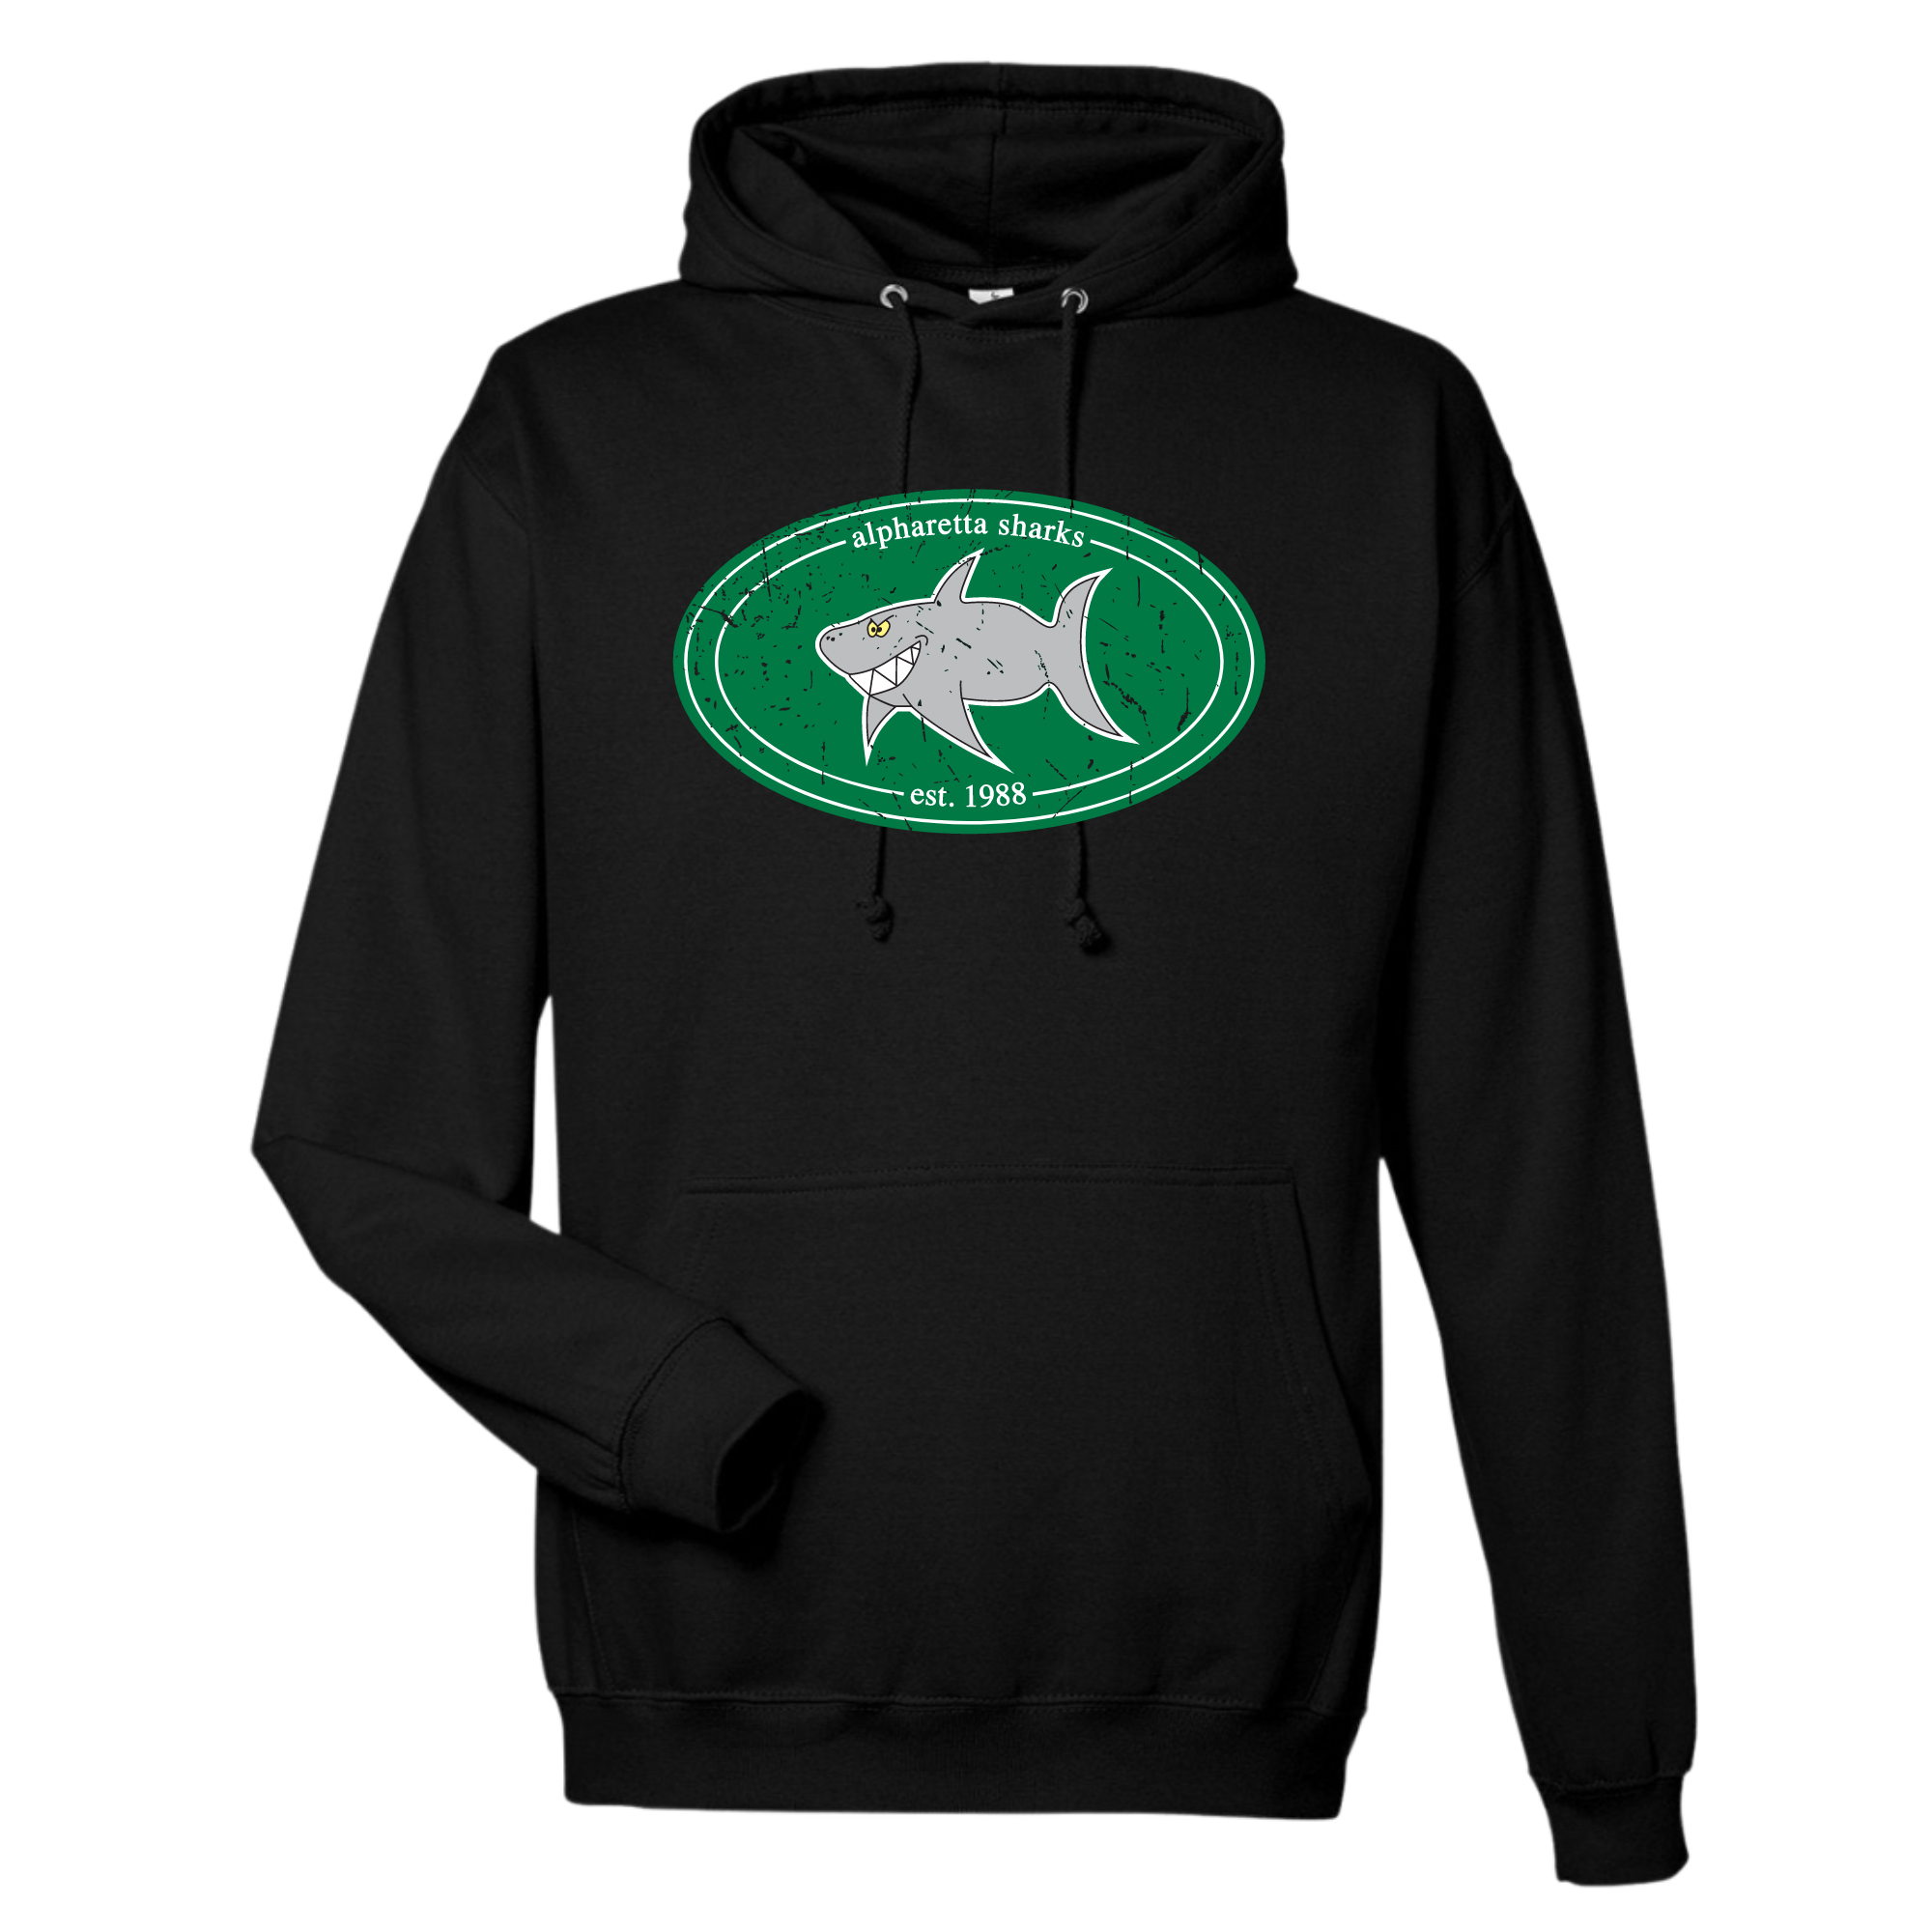 Medium Weight Unisex Hooded Sweatshirt (Customized) - Alpharetta Sharks